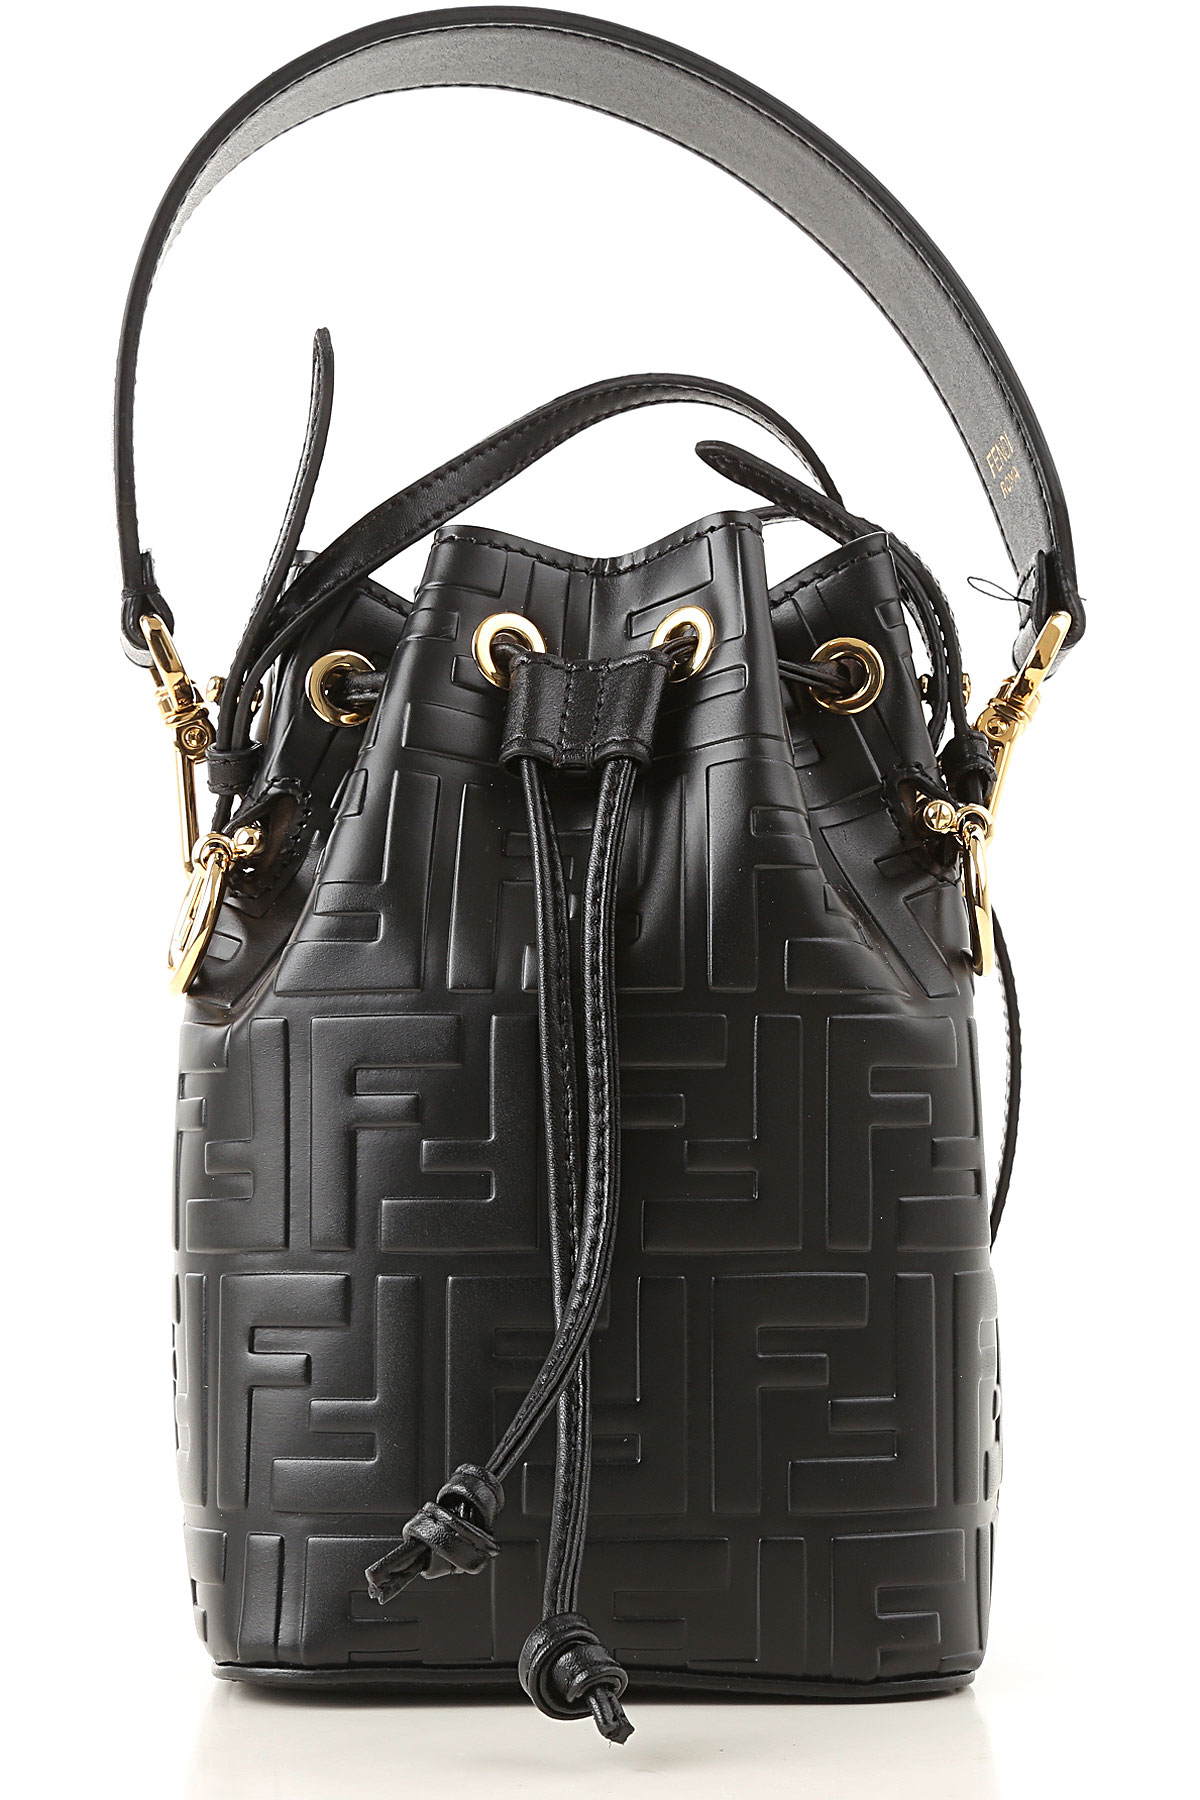 Handbags Fendi, Style code: 8bs010-a3zg-f0kur